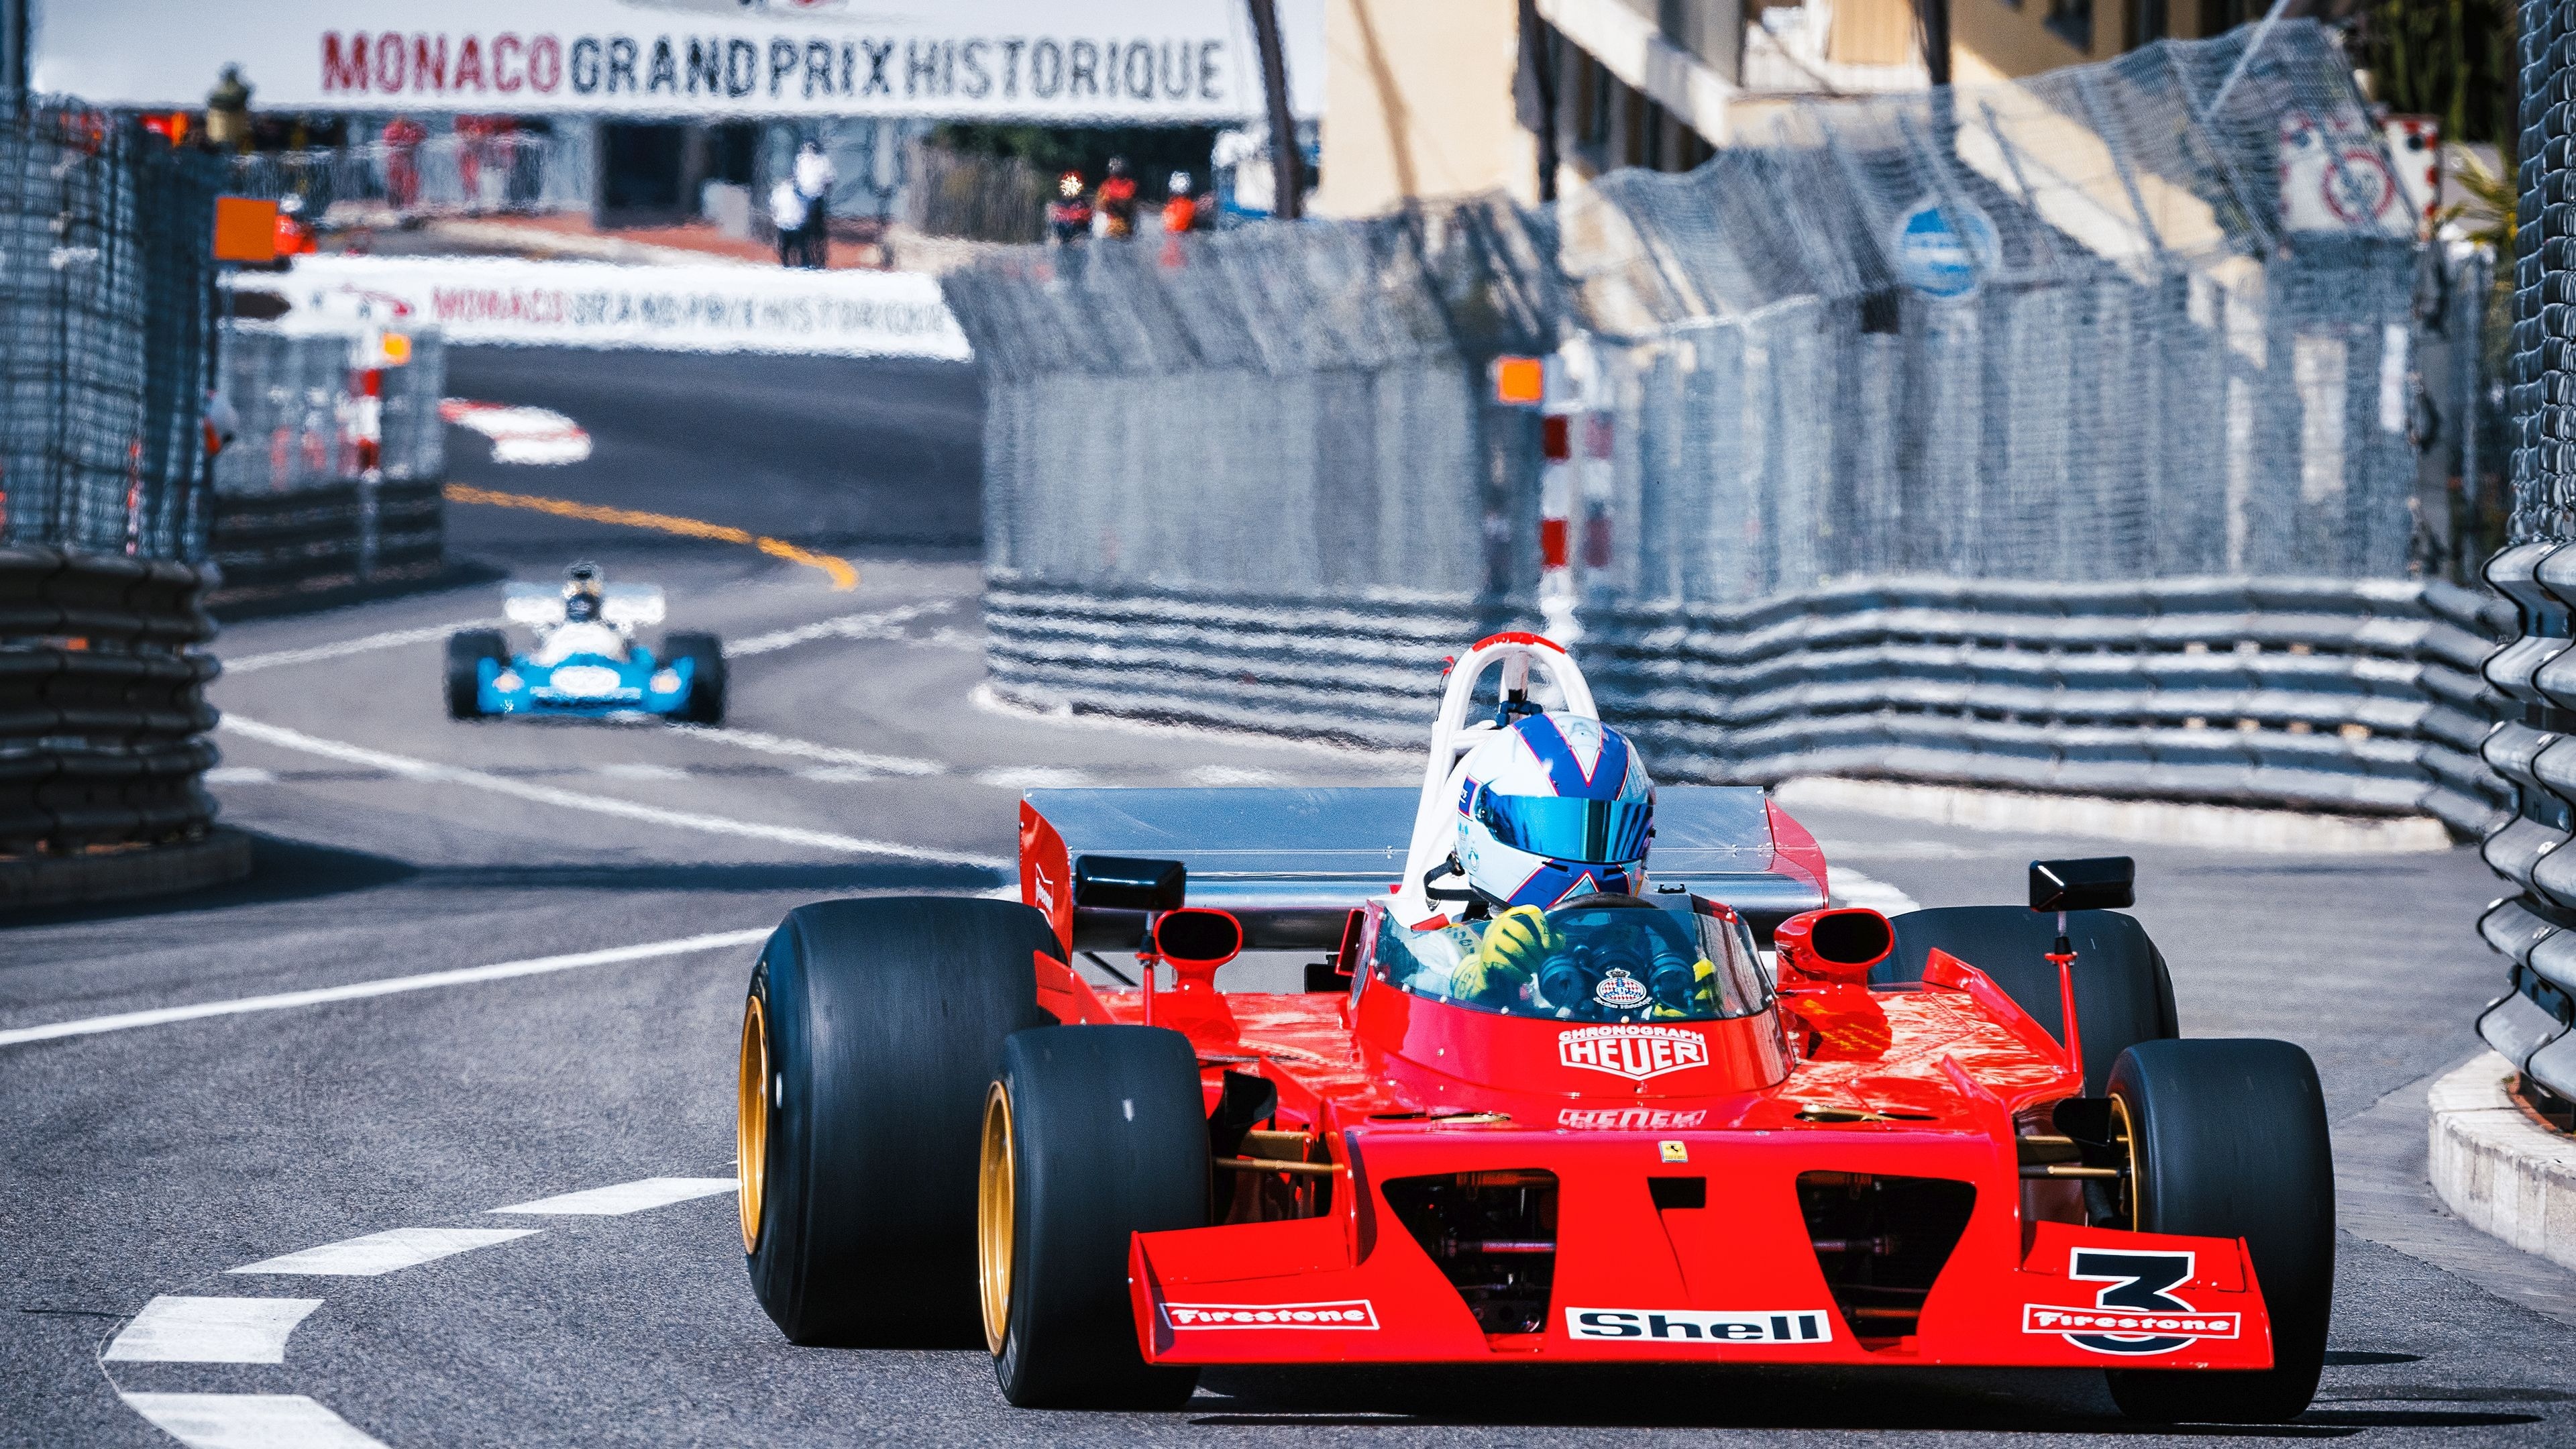 Motorsports: The Monaco Grand Prix, A Formula One motor racing event held annually on the Circuit de Monaco. 3840x2160 4K Wallpaper.